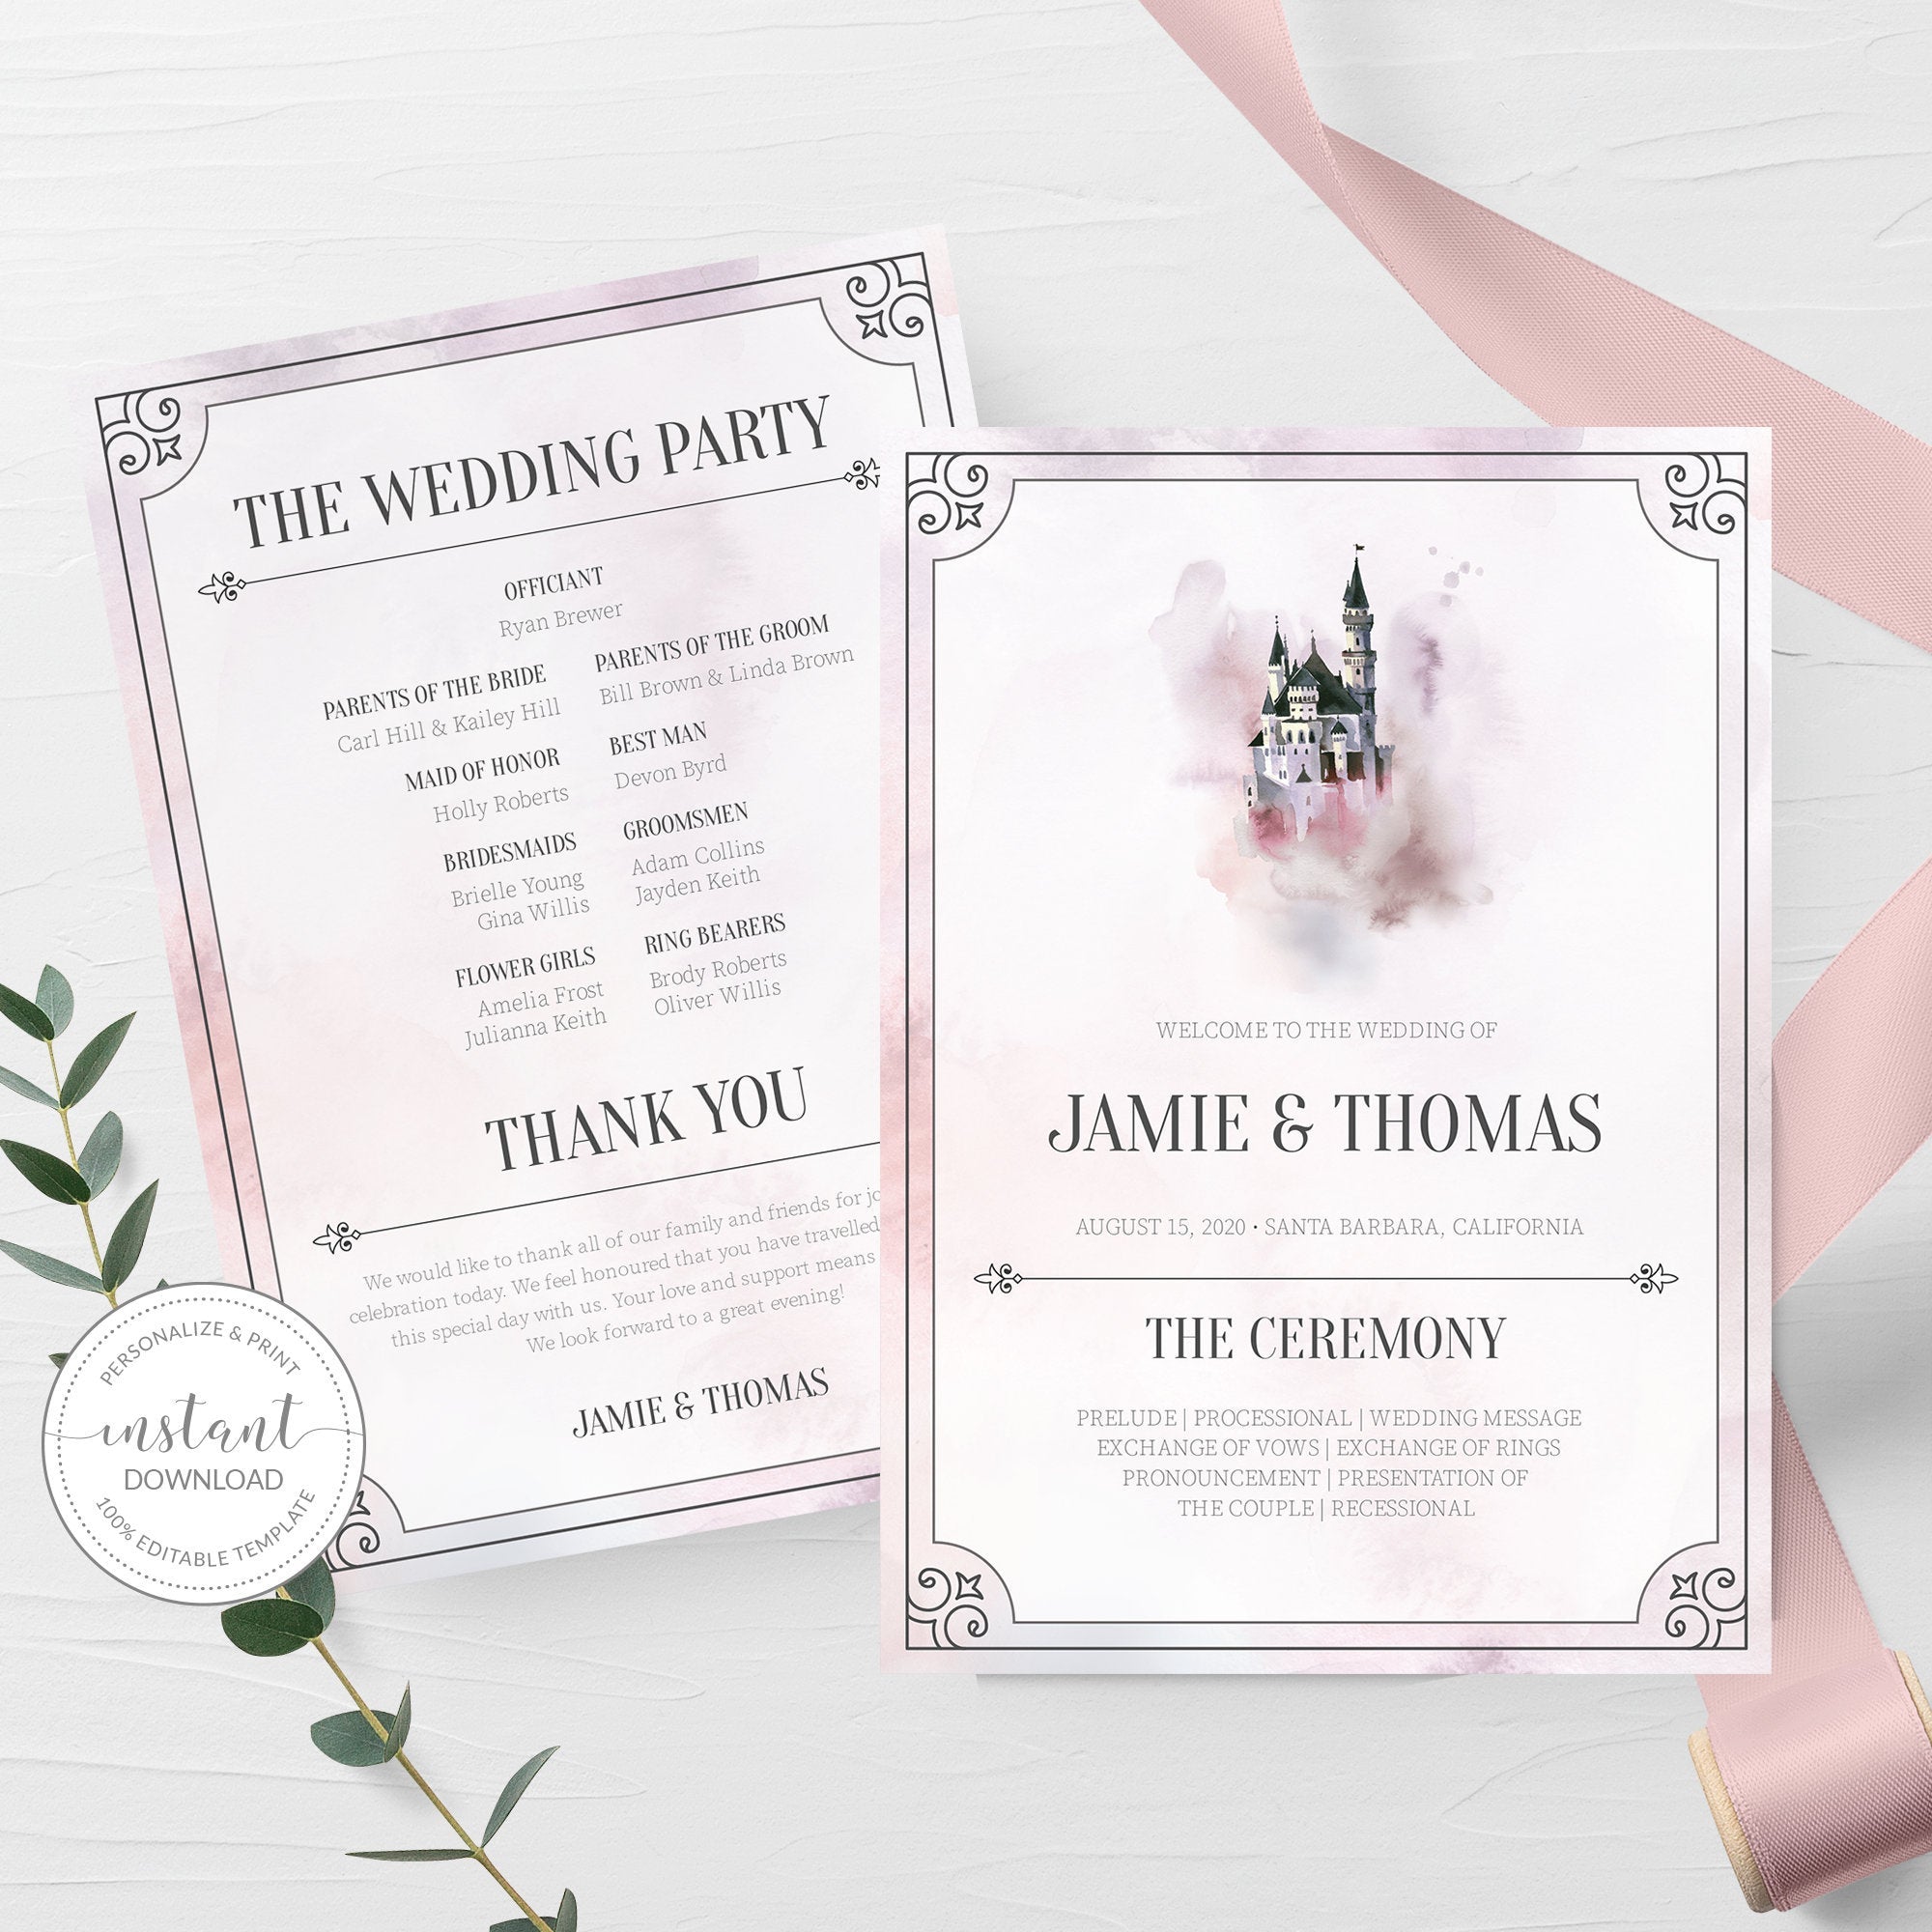 Fairytale Wedding Ceremony Program Template, Once Upon a Time Wedding Programs, Editable Wedding Program, 5x7 DIGITAL DOWNLOAD - D500 - @PlumPolkaDot 